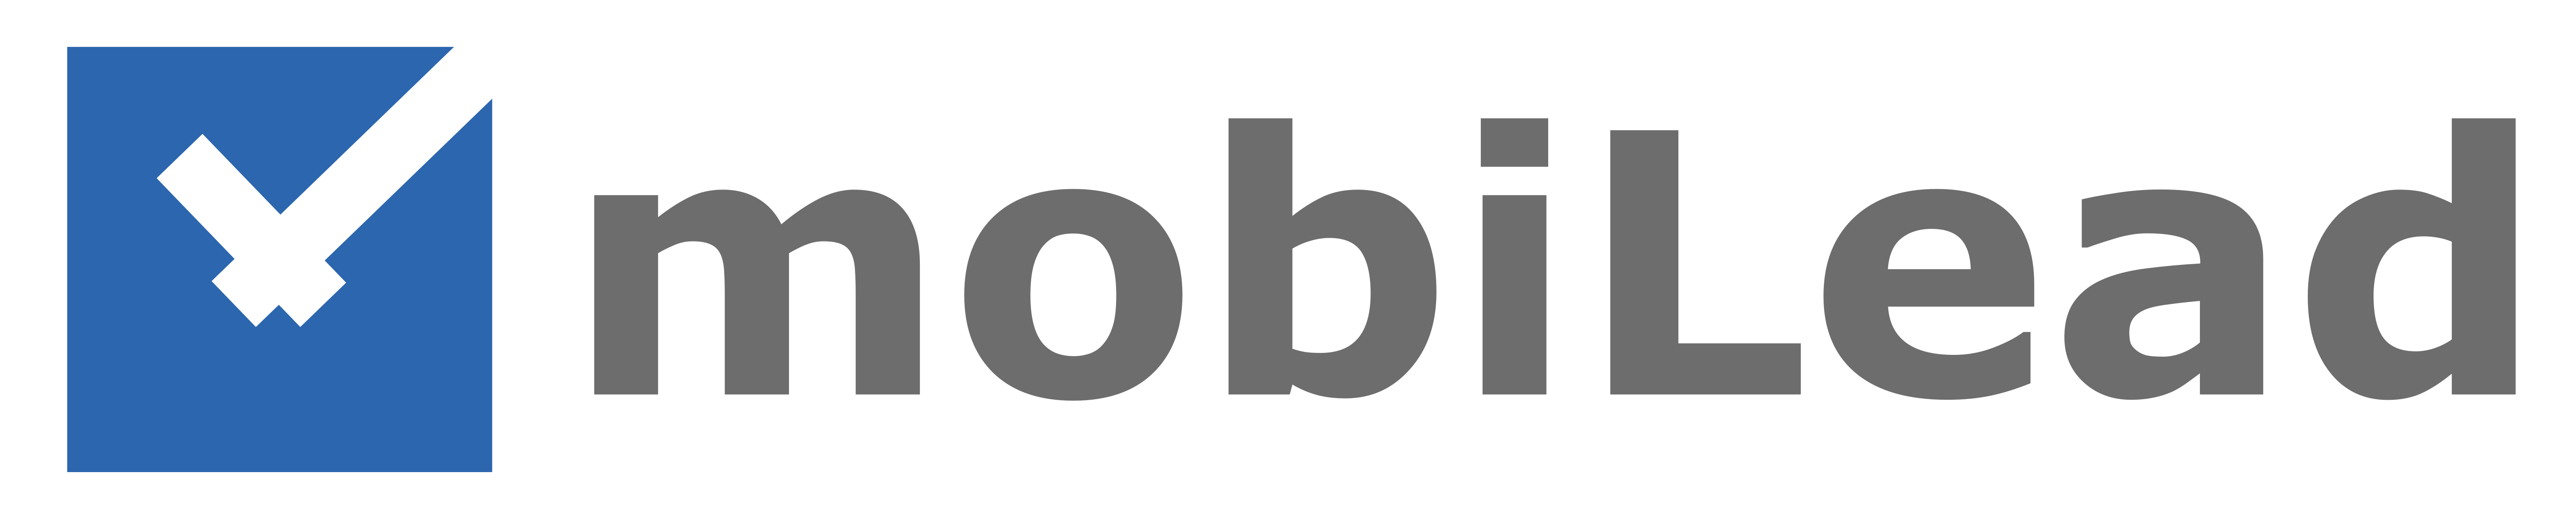 mobiLead: Smart and Unique Identifiers